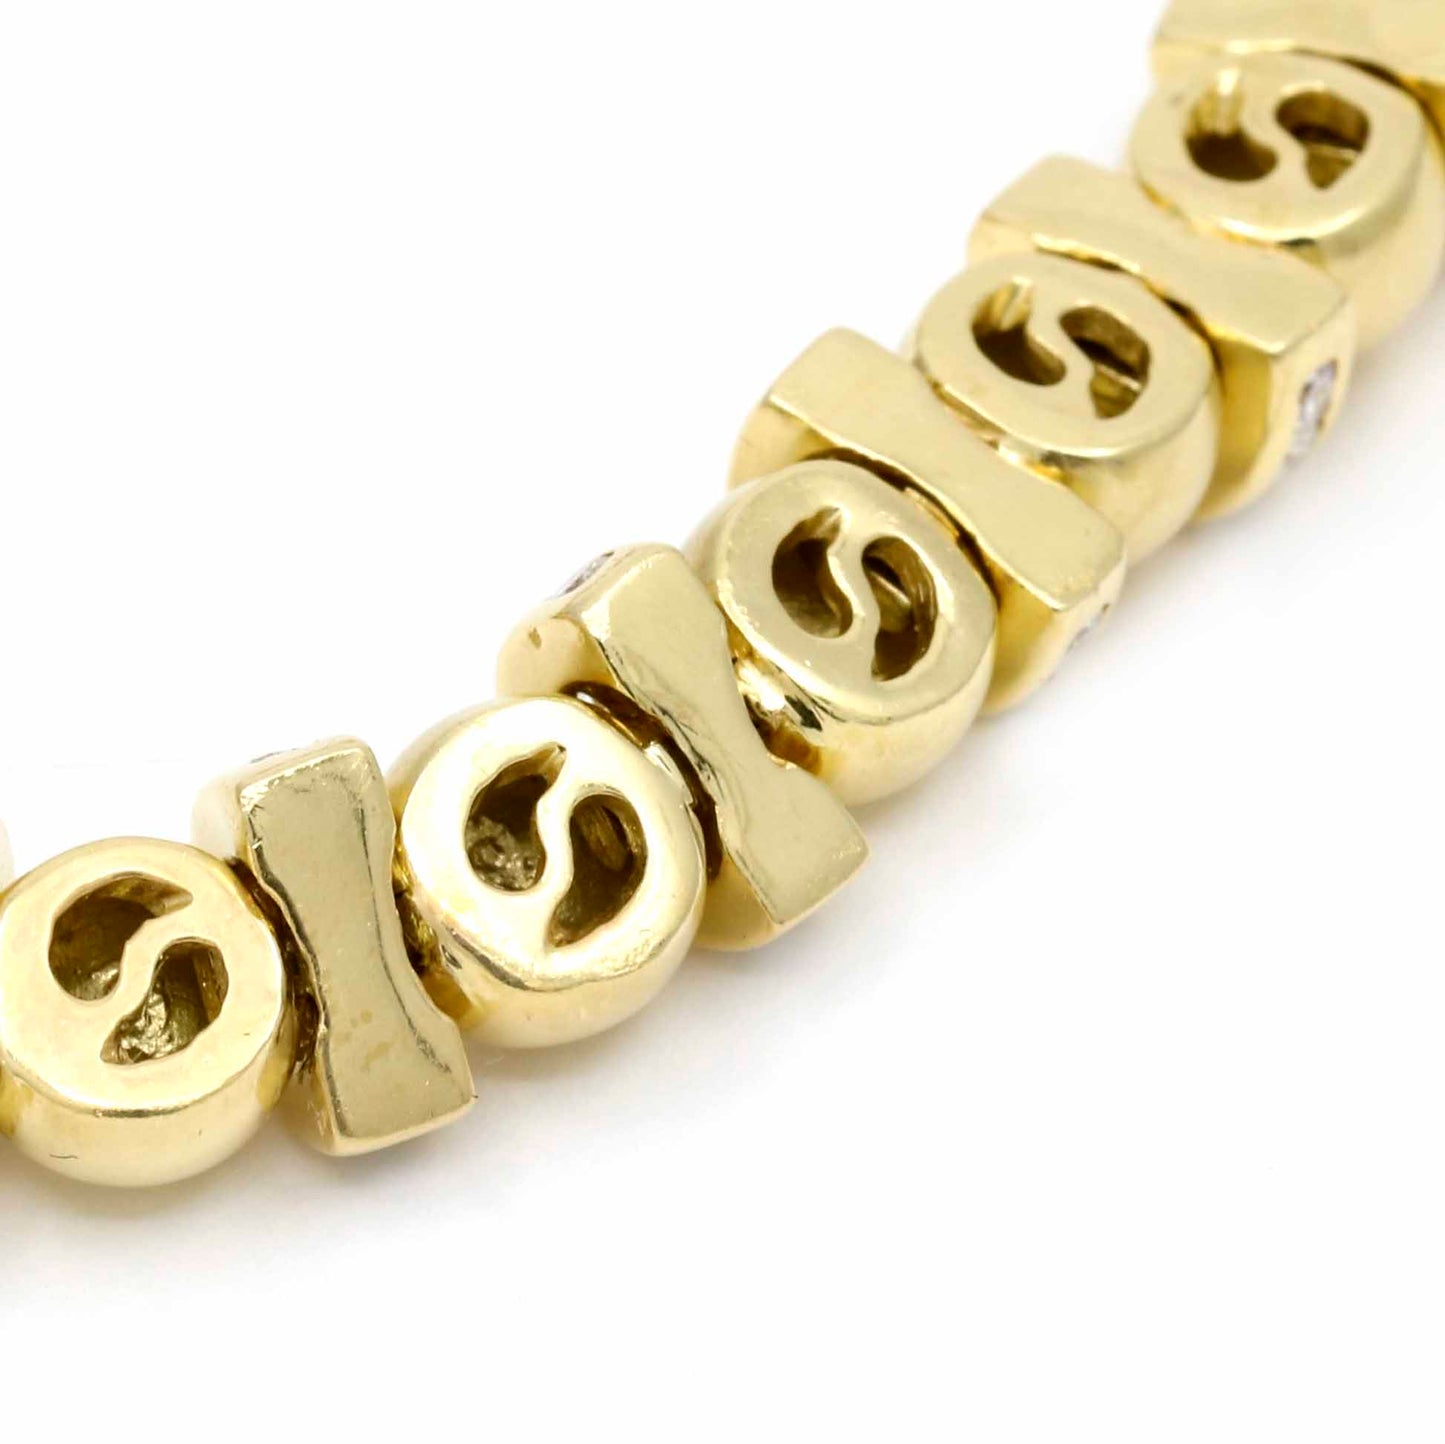 Women's Krypell Diamond 18k Yellow Gold Bead Choker Necklace ( 13.50 cttw )